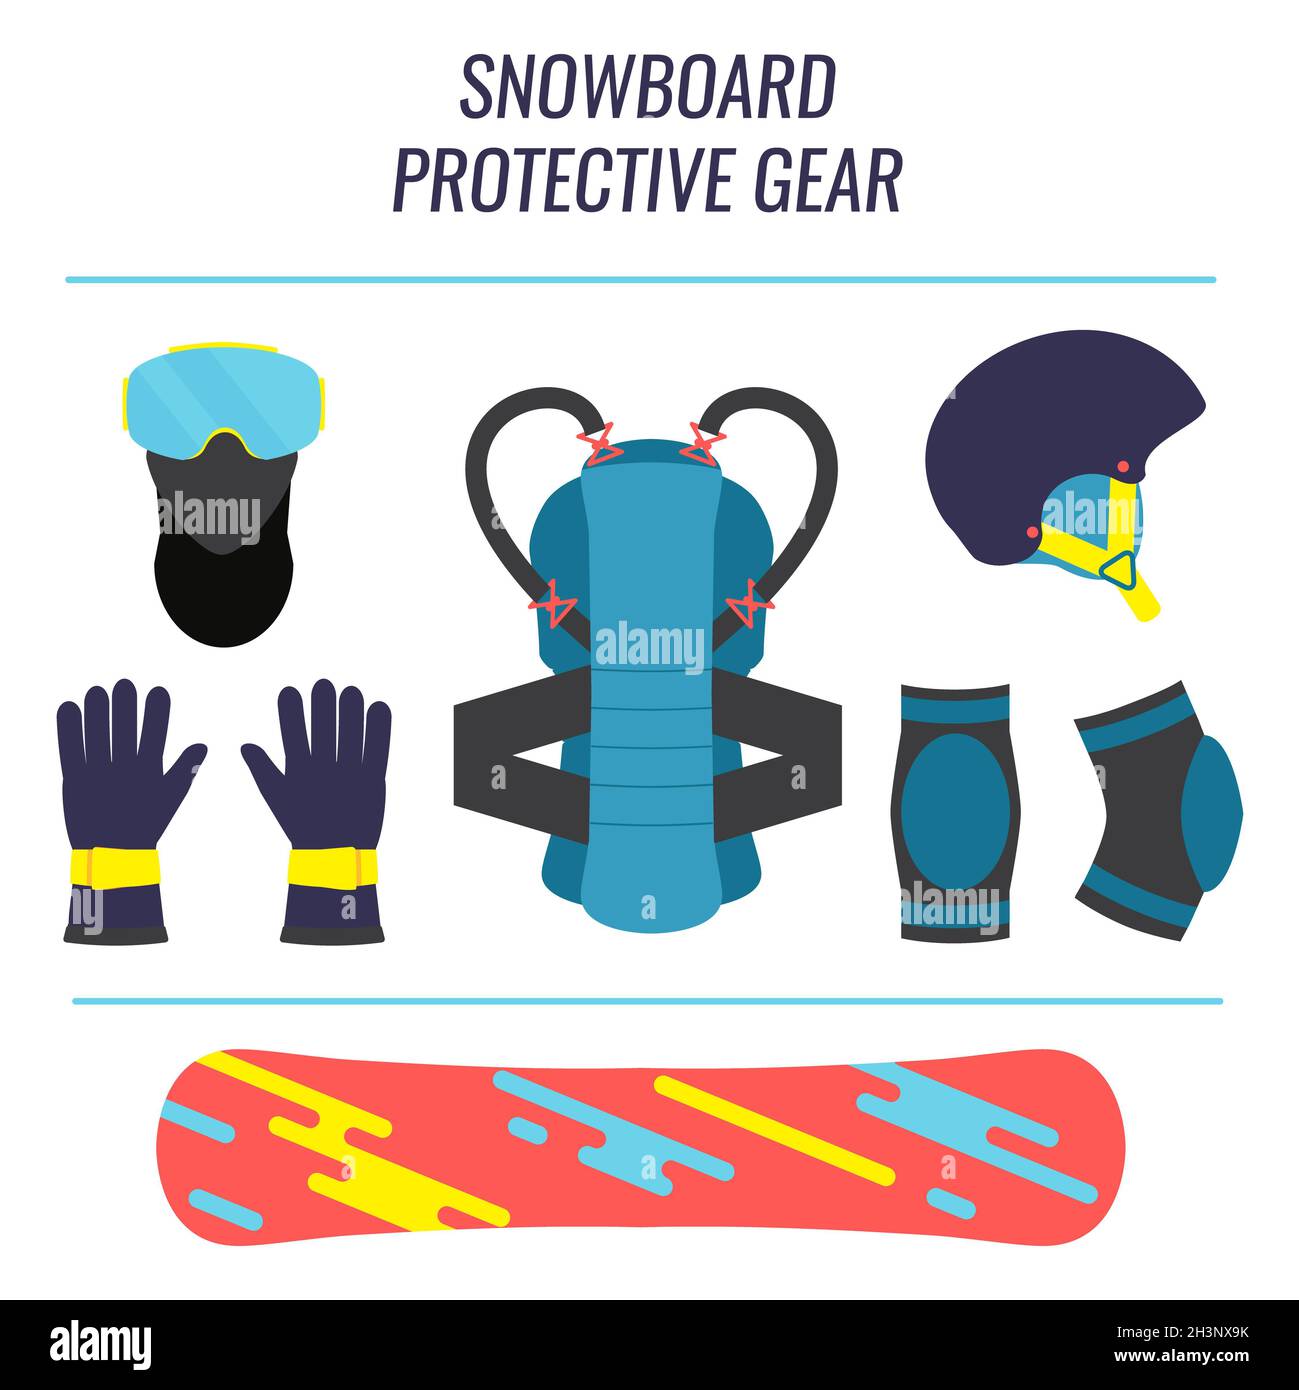 Snowboard-Sicherheitsausrüstung, Illustration Stockfoto